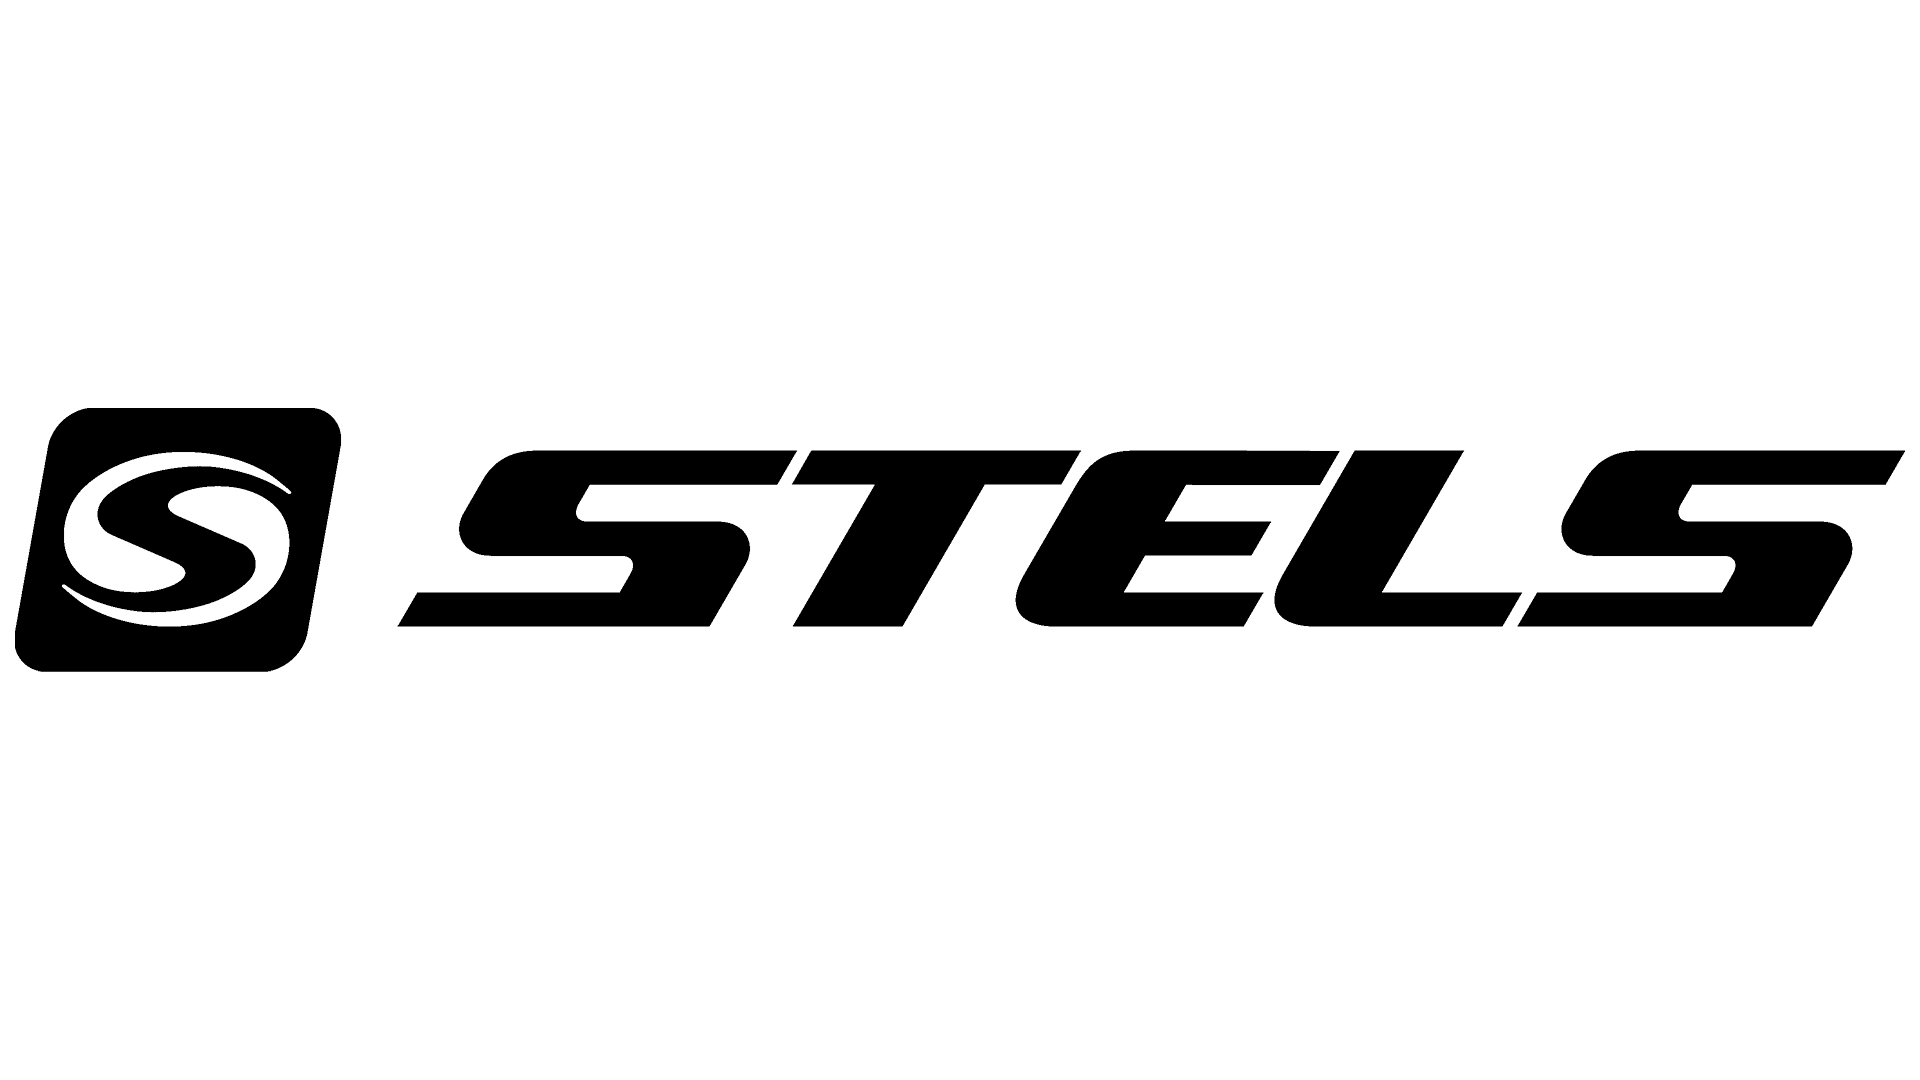 Stels лого. Логотип стелс велосипеды. Stels логотип в векторе. Stels надпись. Наклейки стелс